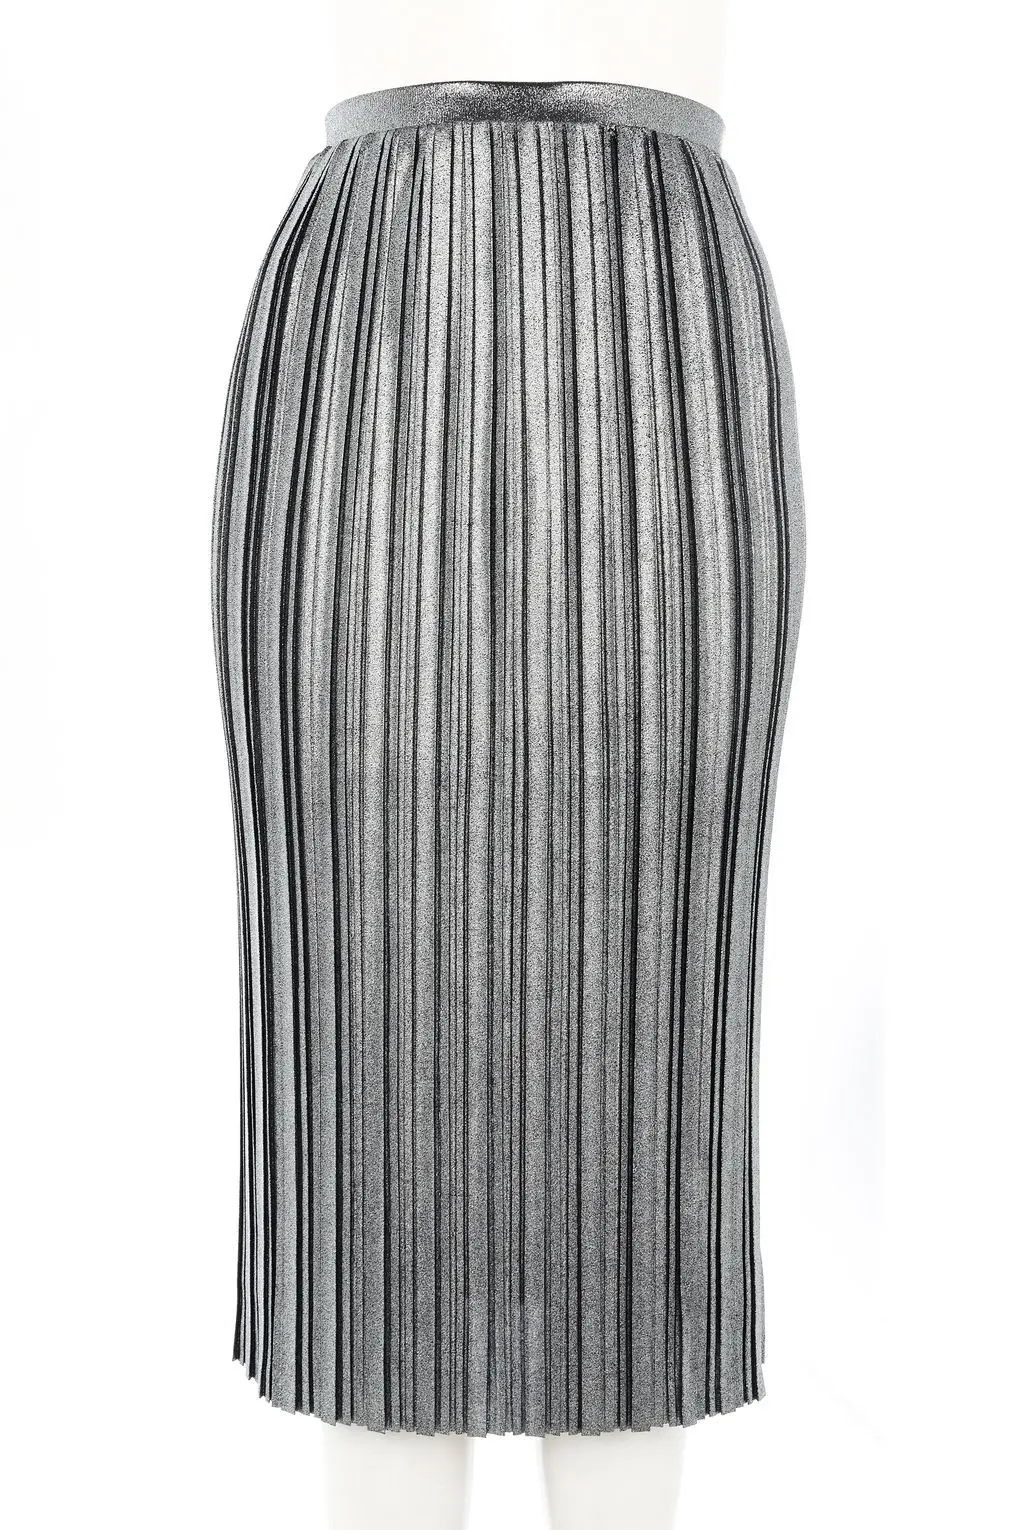 Metallic Jersey Pleated Skirt. (Image: topshop.com)